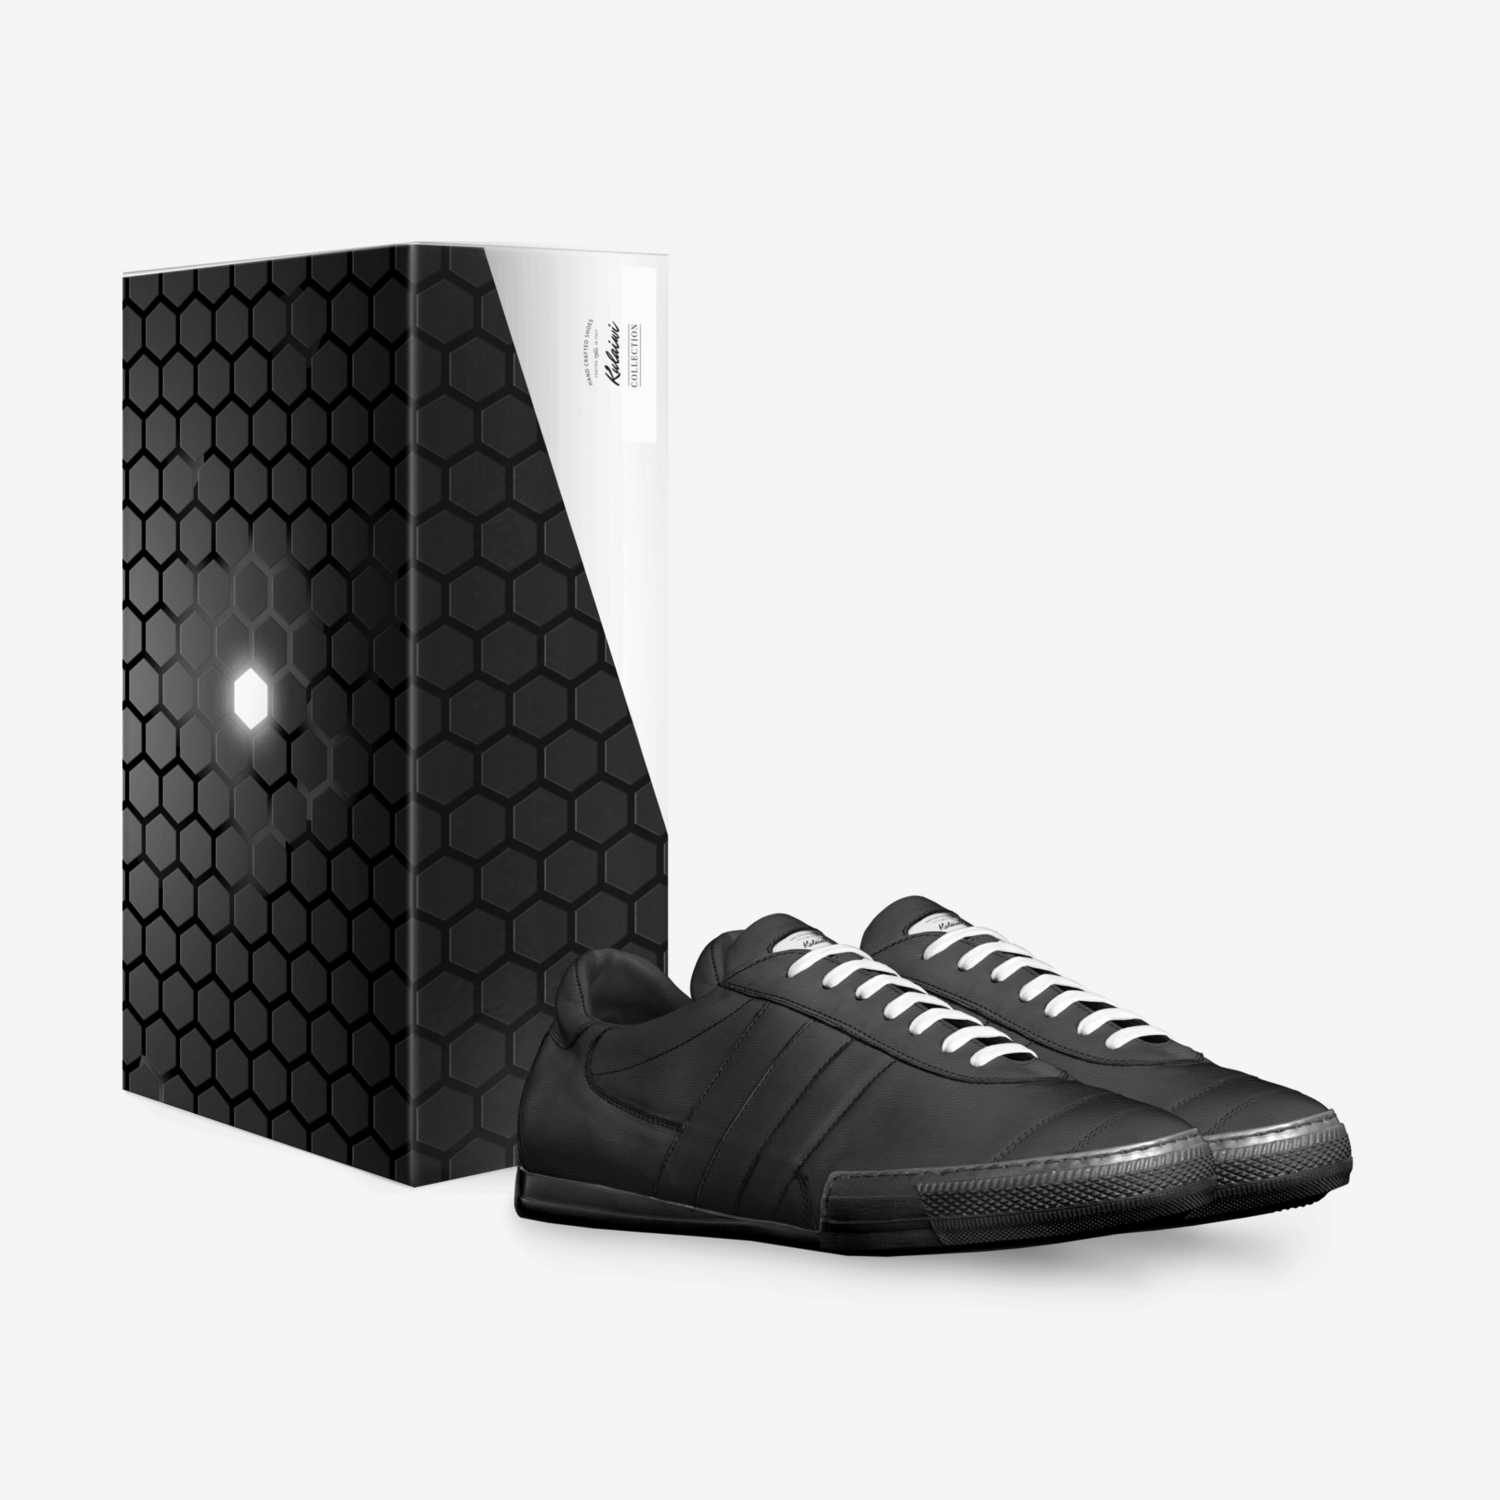 Sebren Khufu custom made in Italy shoes by Sebren Khufu | Box view